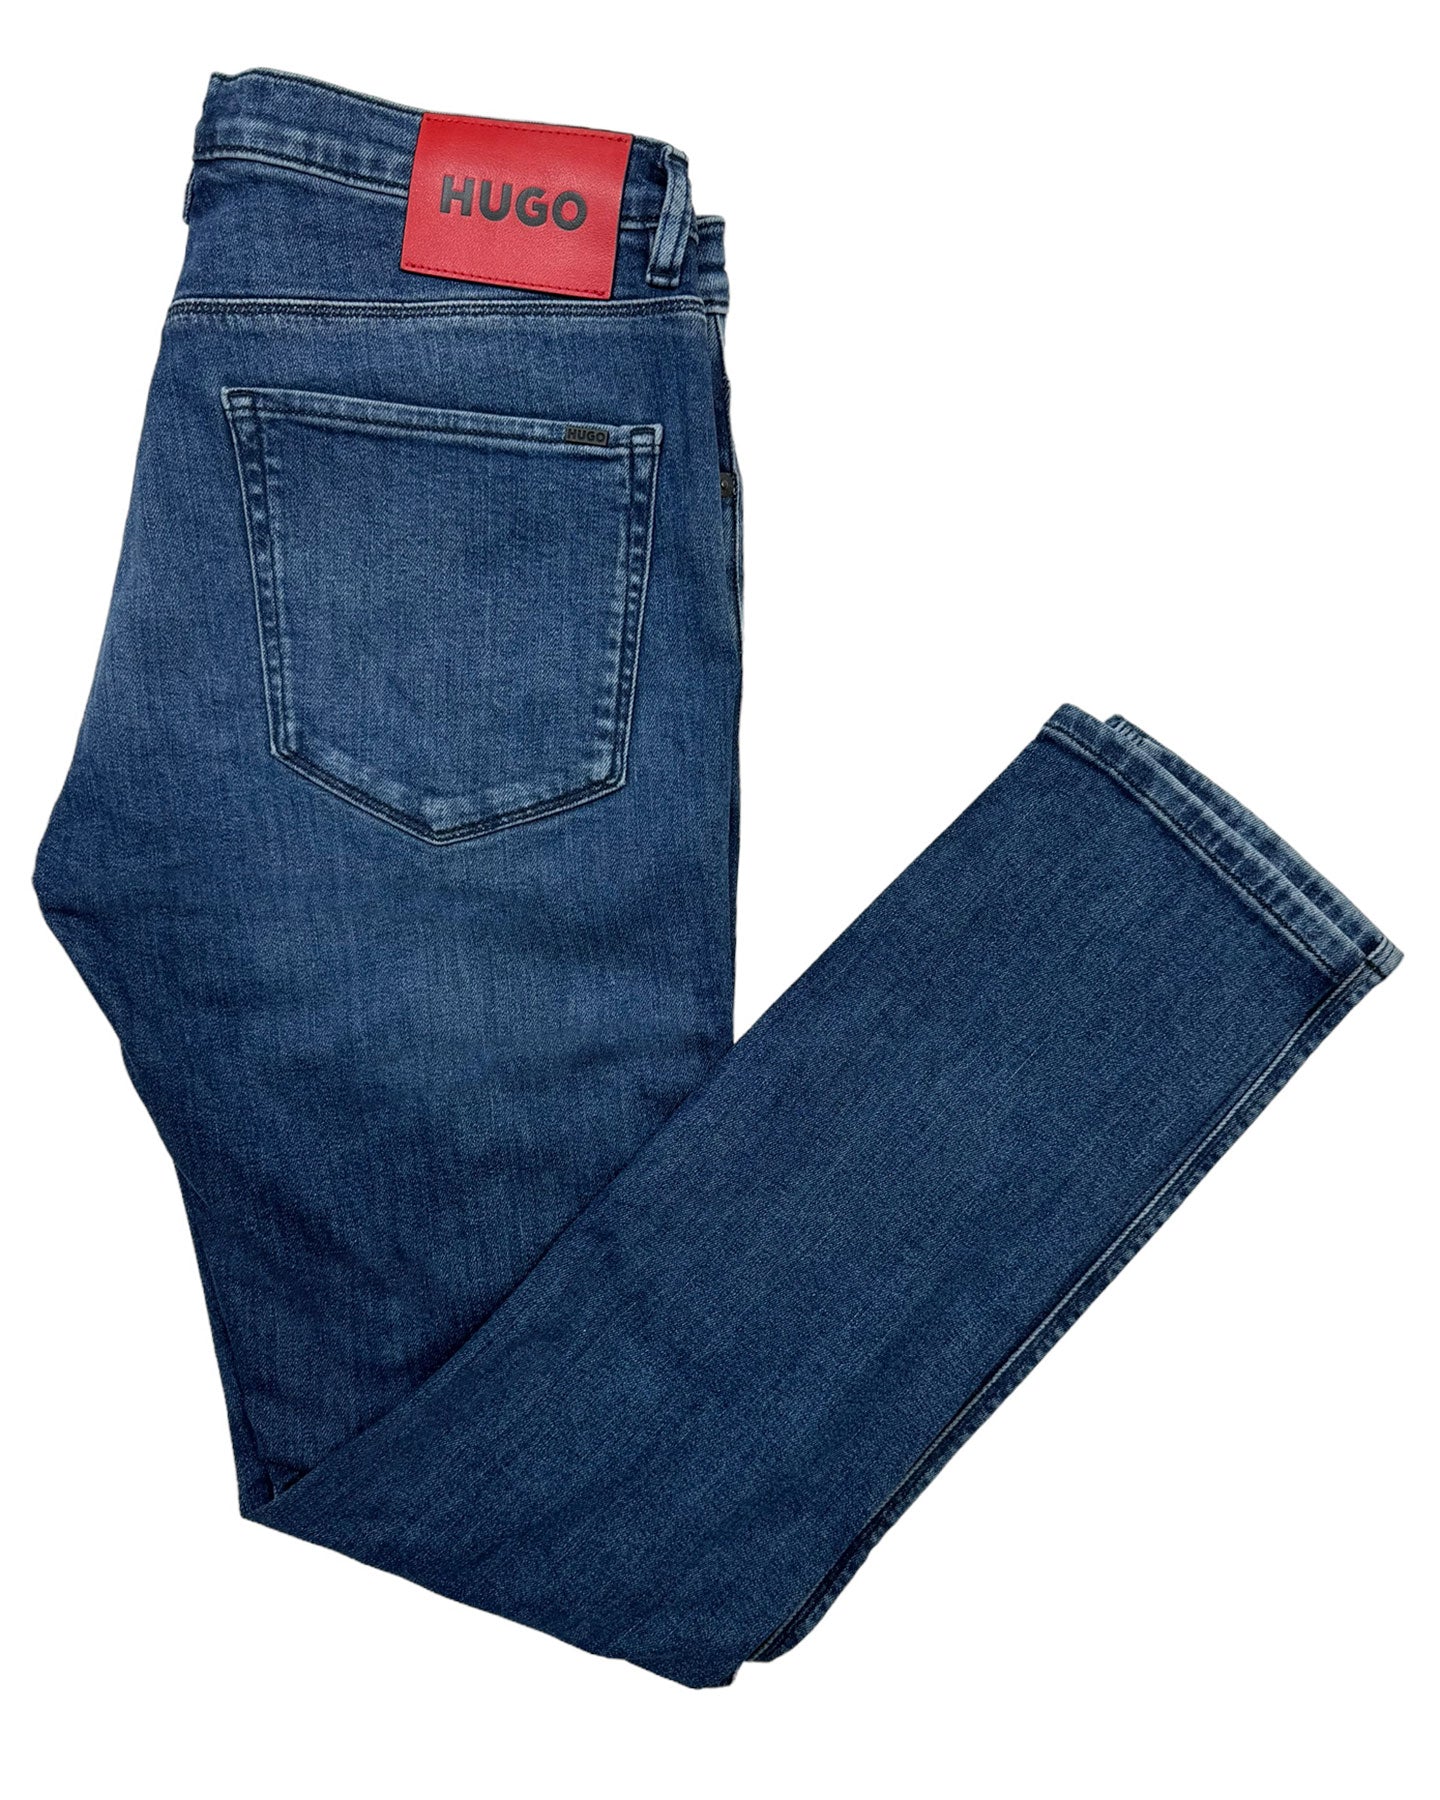 Hugo Boss Denim Jeans HUGO 734 Extra Slim Fit